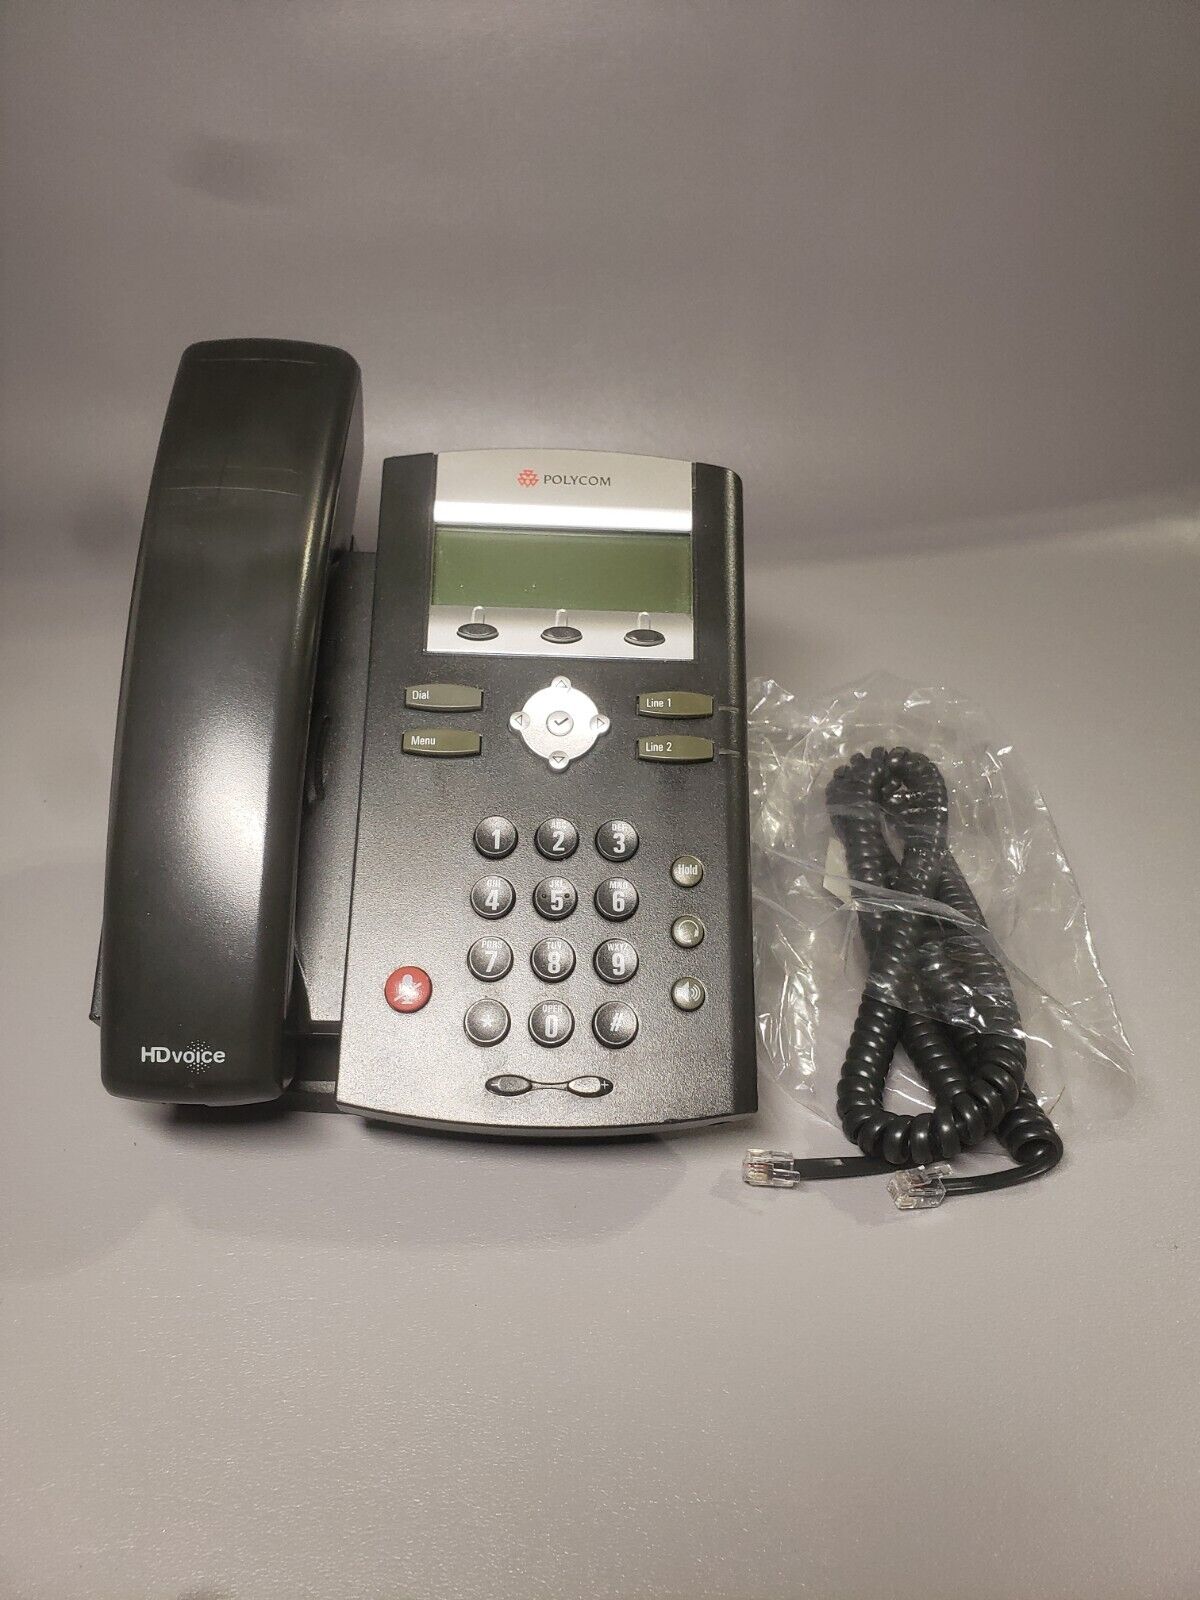 Polycom VVX310 VoIP Phone Skype Business Edition 6 Lines Ethernet Ports 3 Way